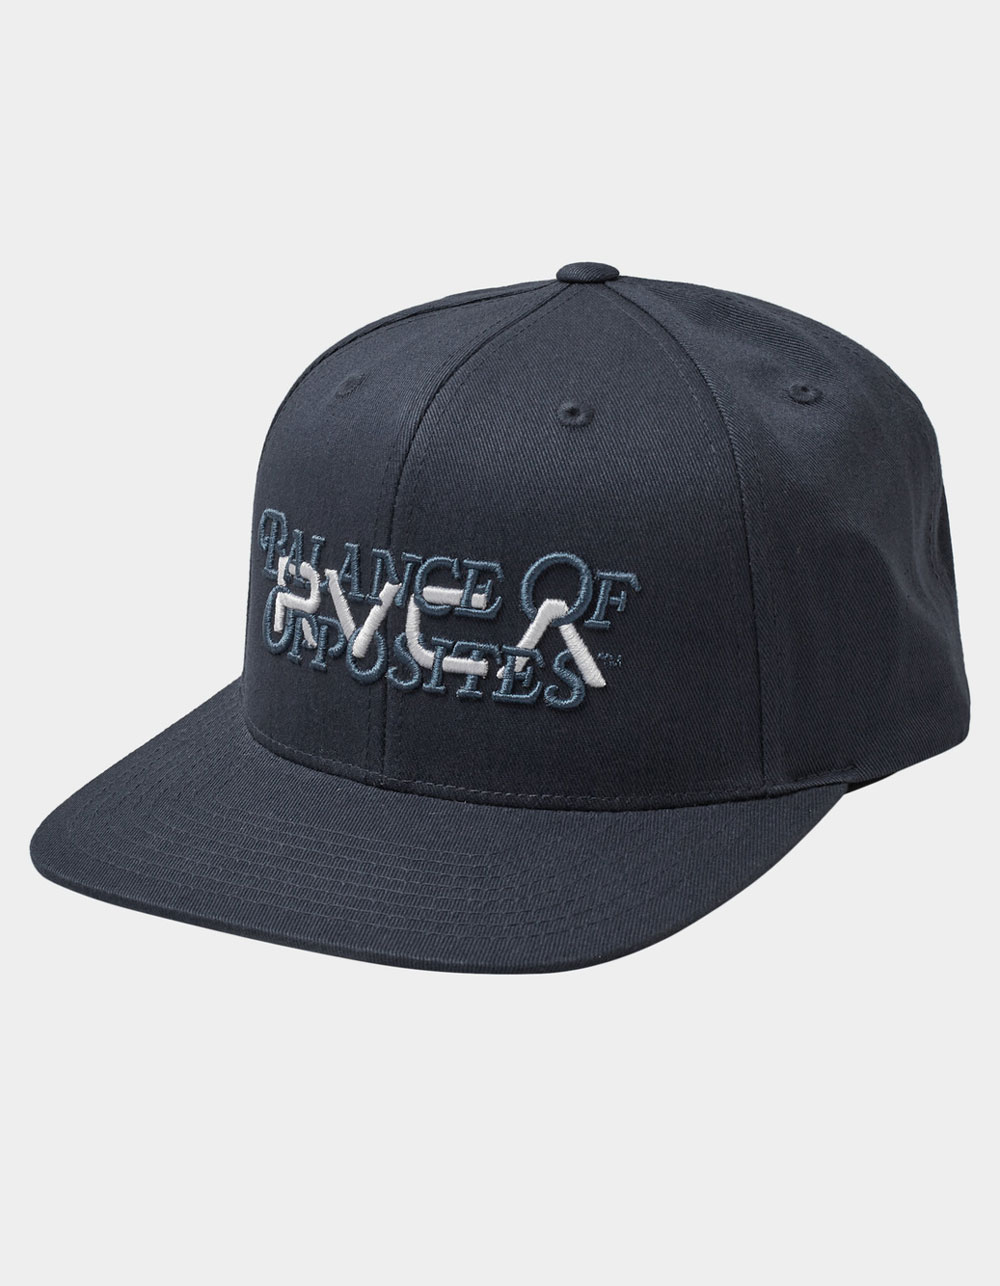 RVCA Big Balance Boys Snapback Hat